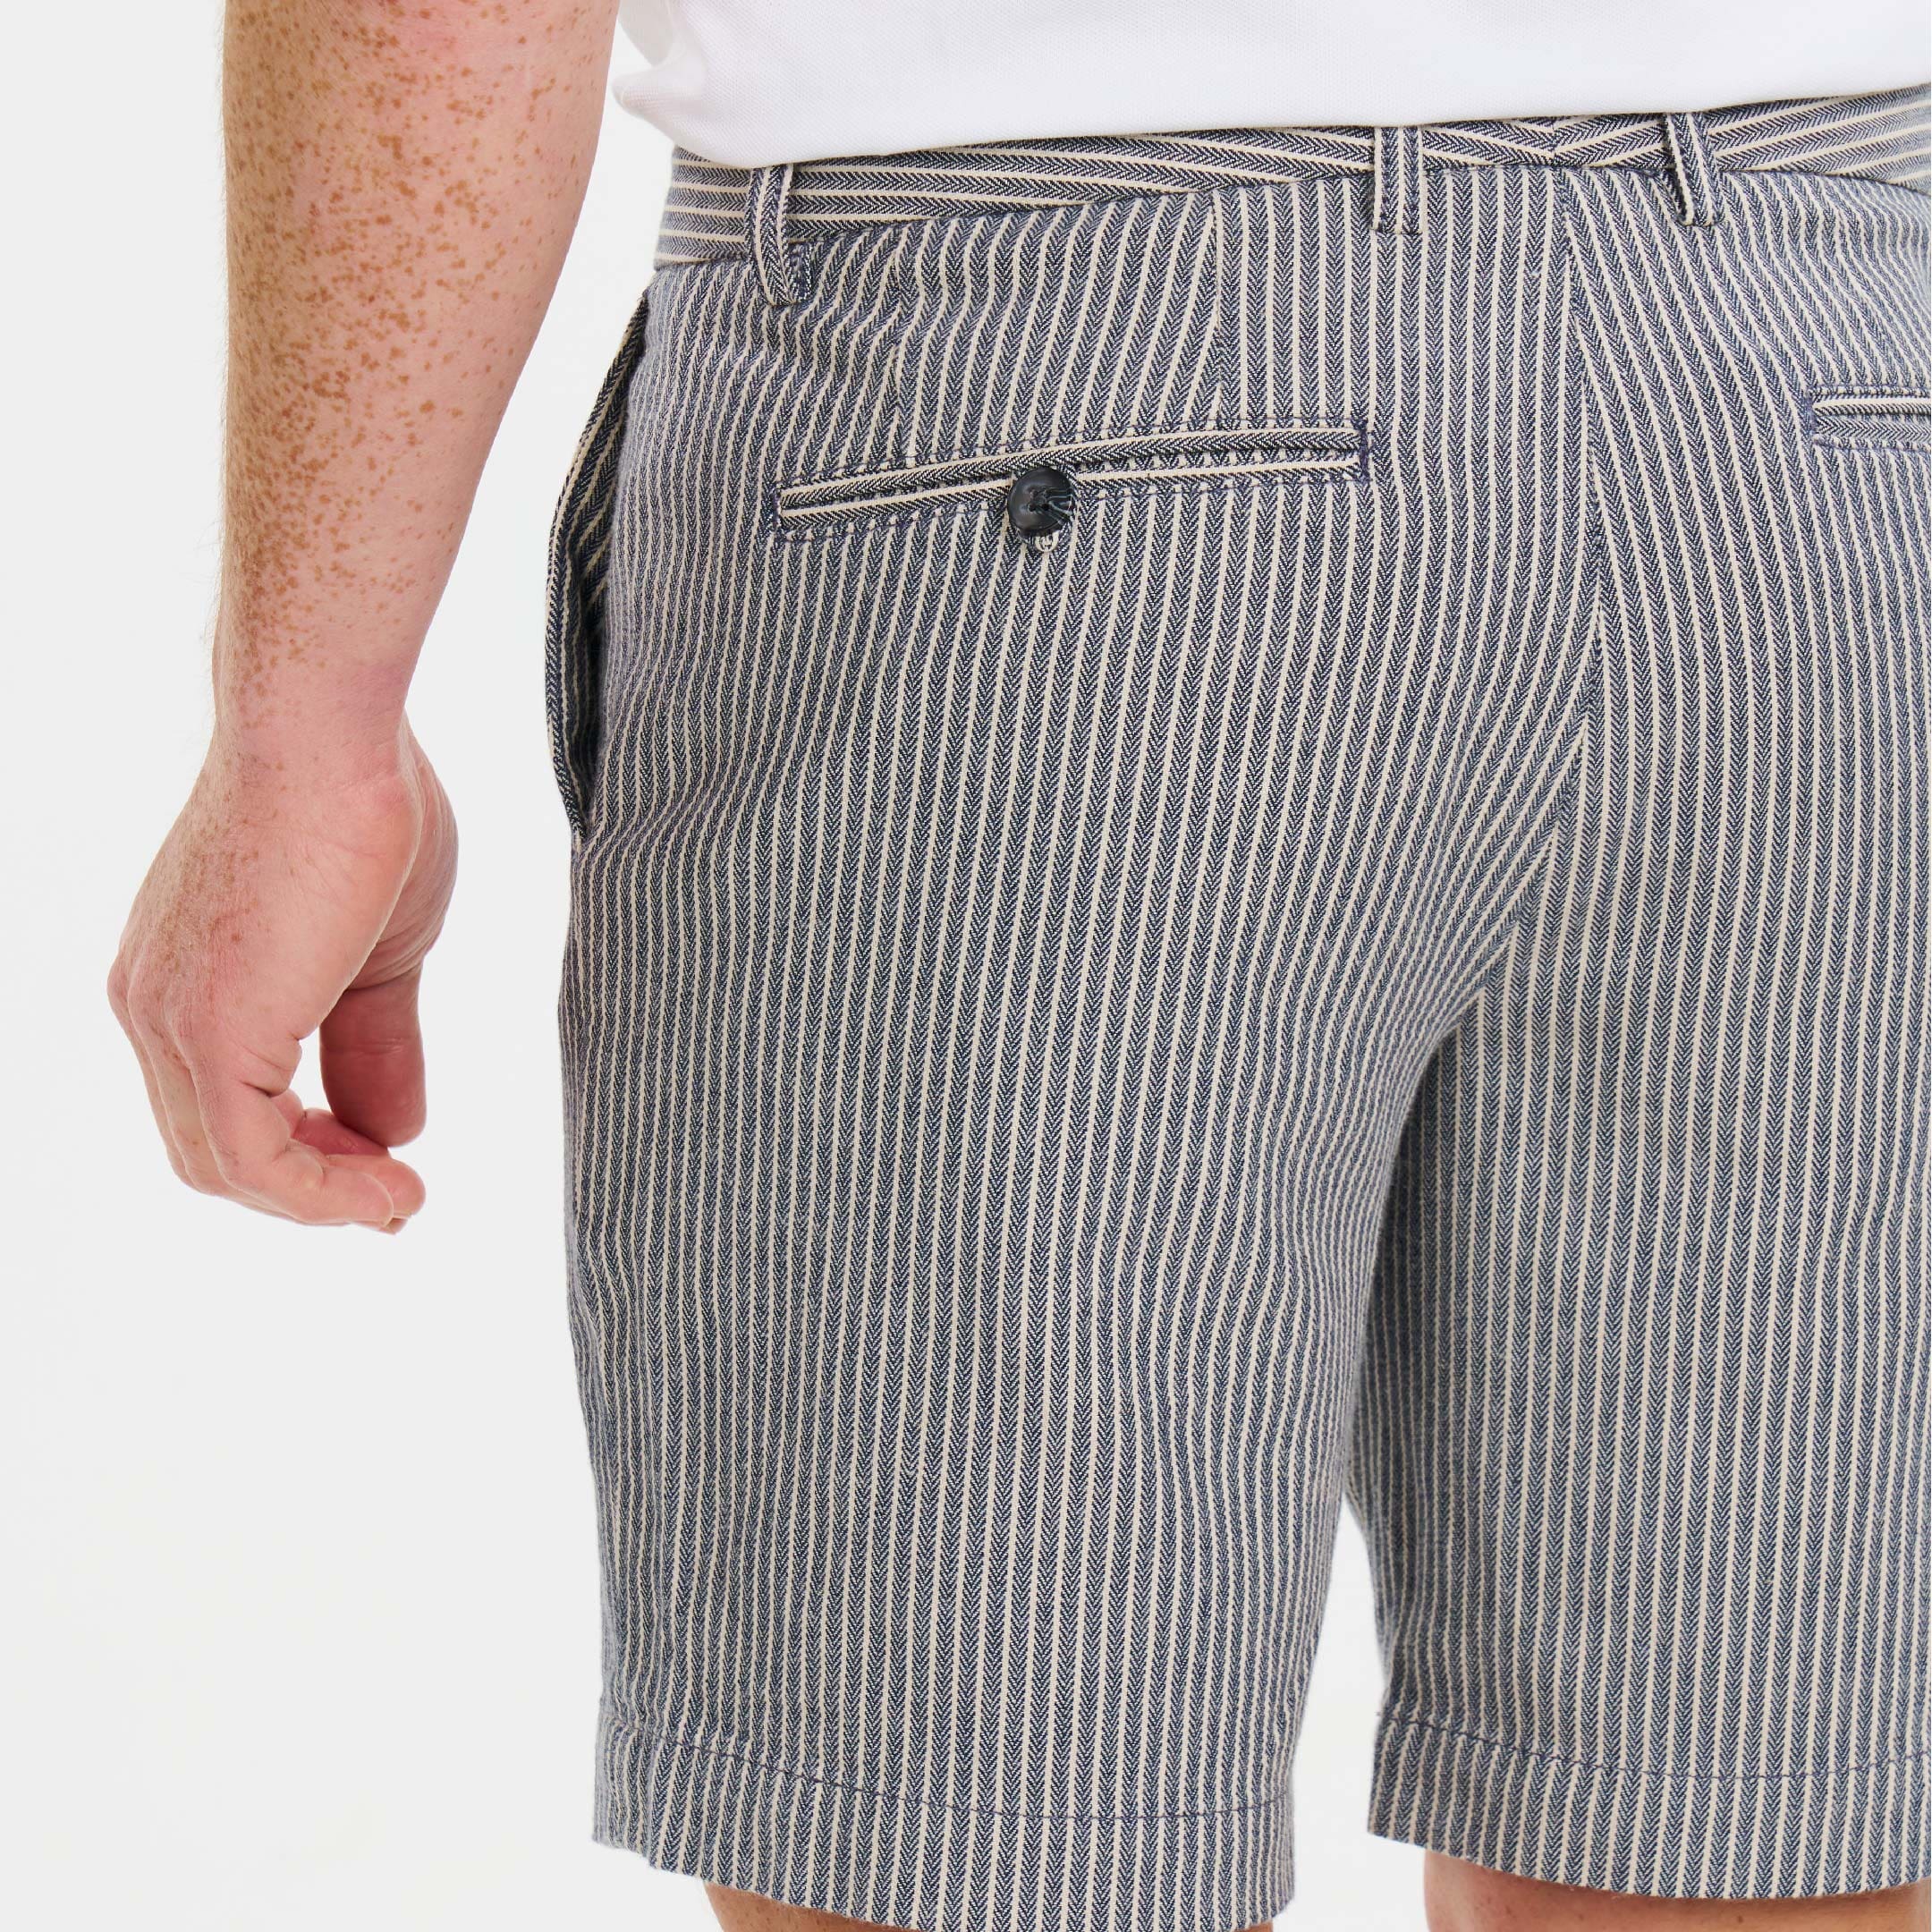 Ash & Erie Navy Pinstripe Hampton Stretch Chino Short for Short Men   Chino Shorts